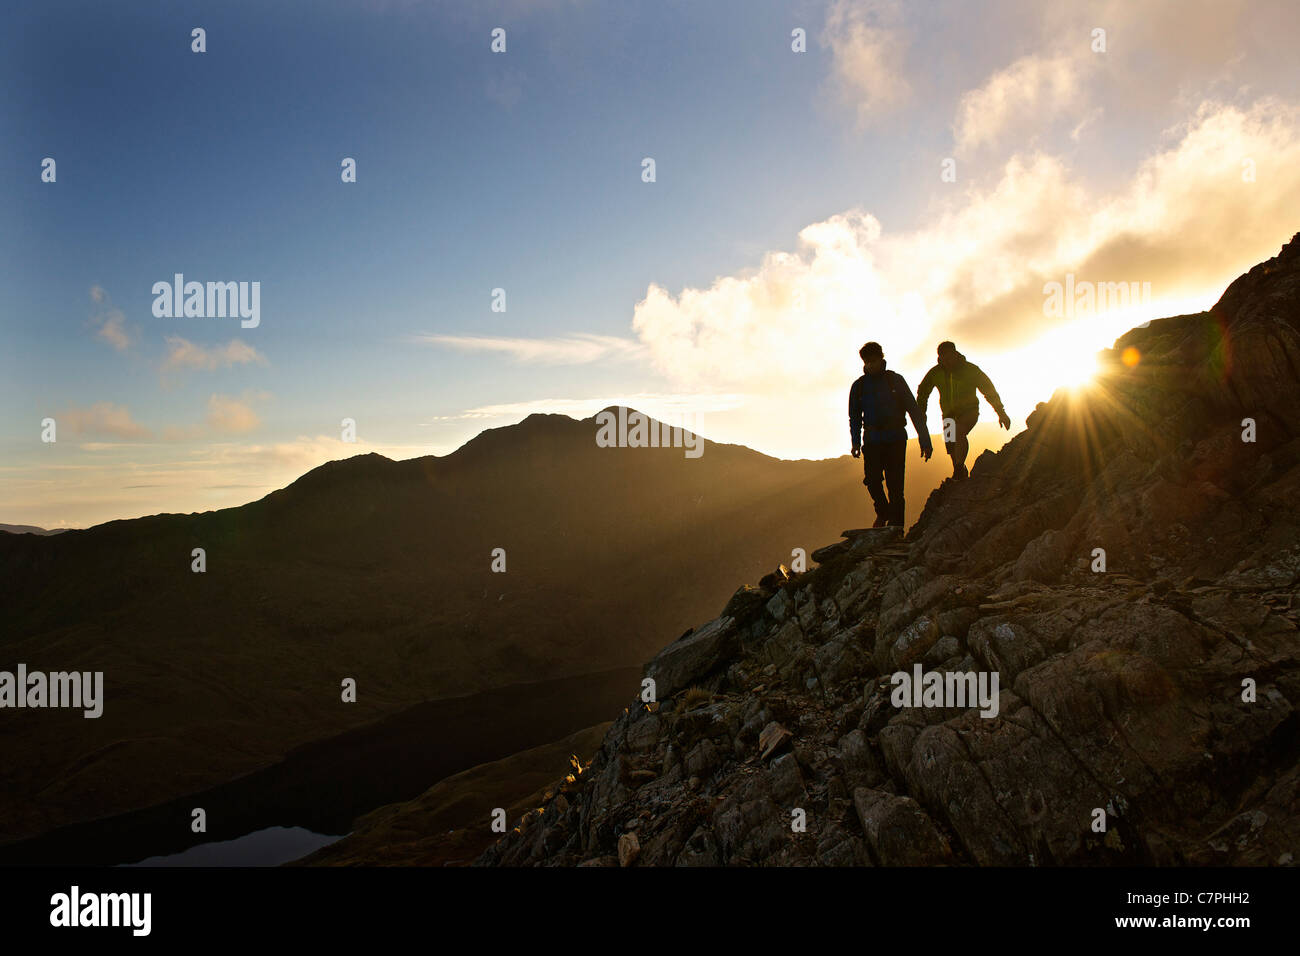 Men hiking on rocky mountainside Stock Photo